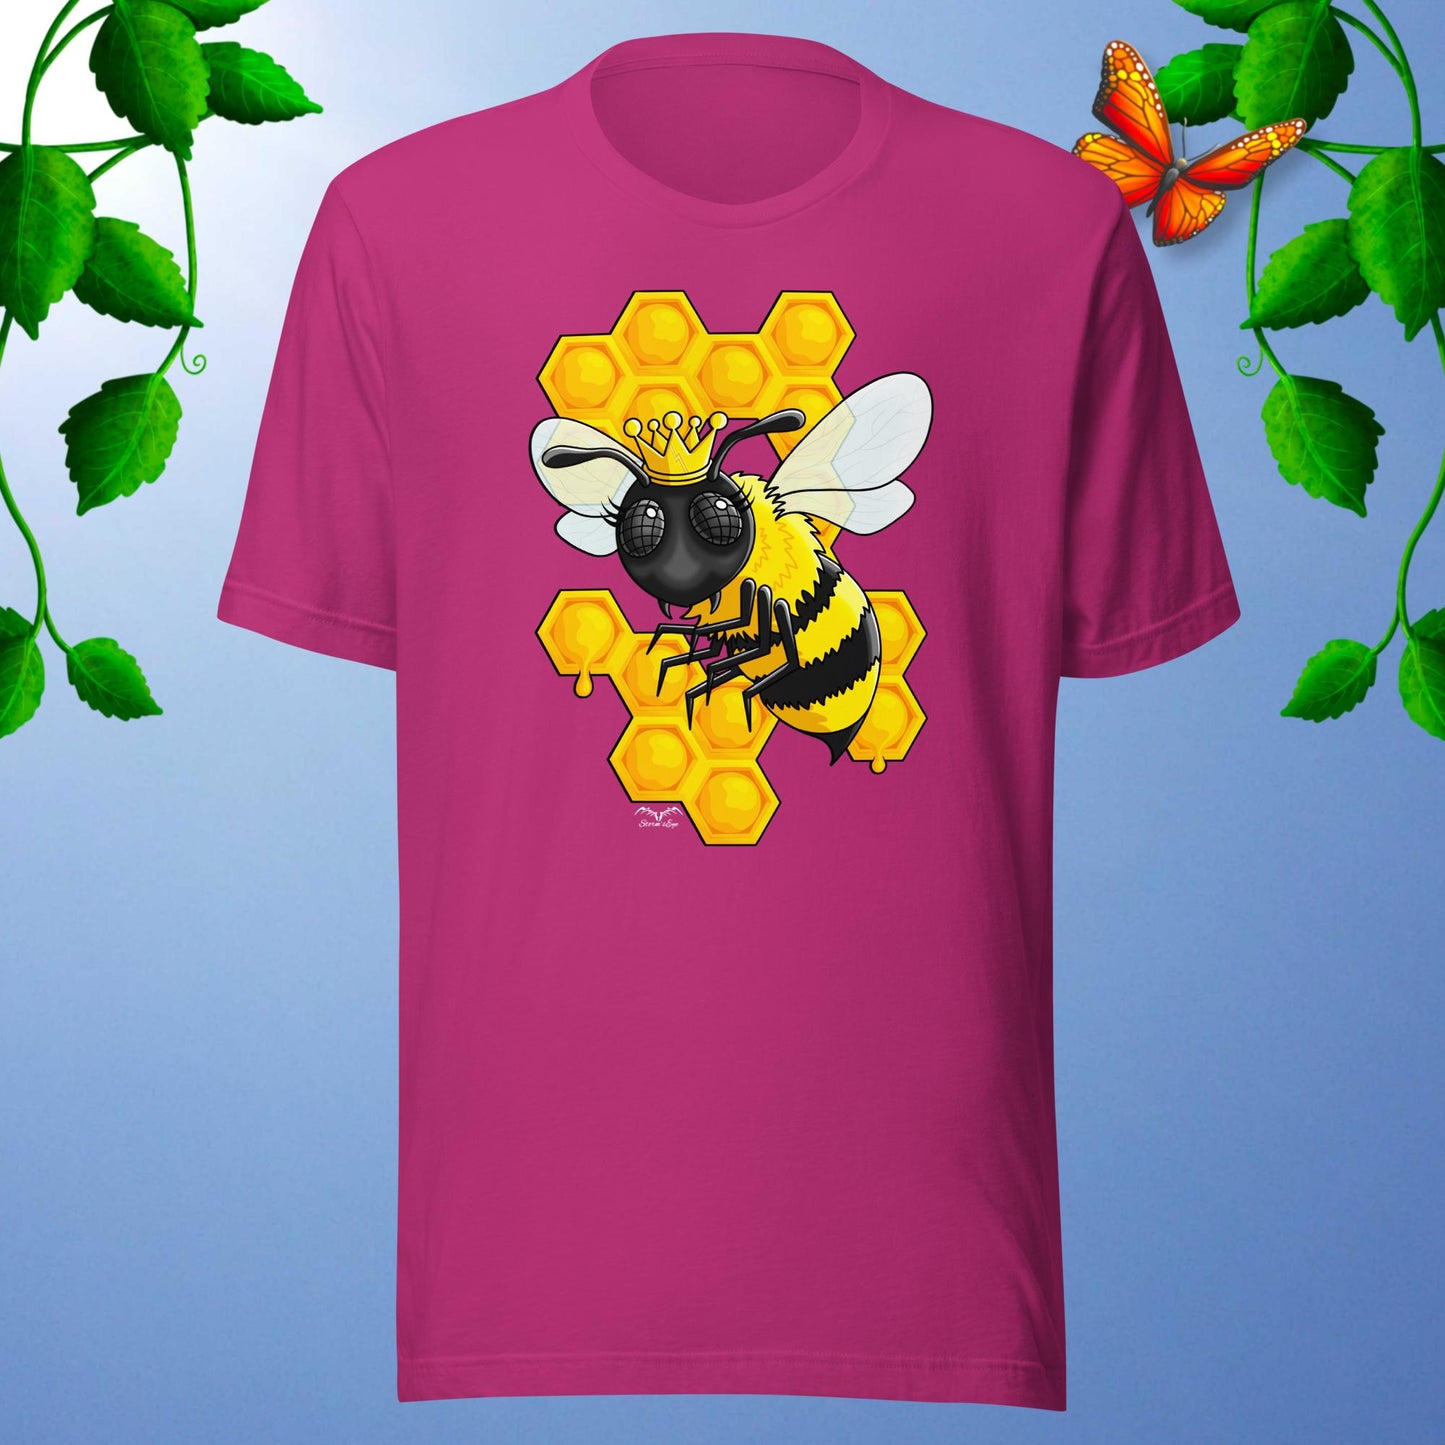 queen bee t-shirt pink by stormseye design